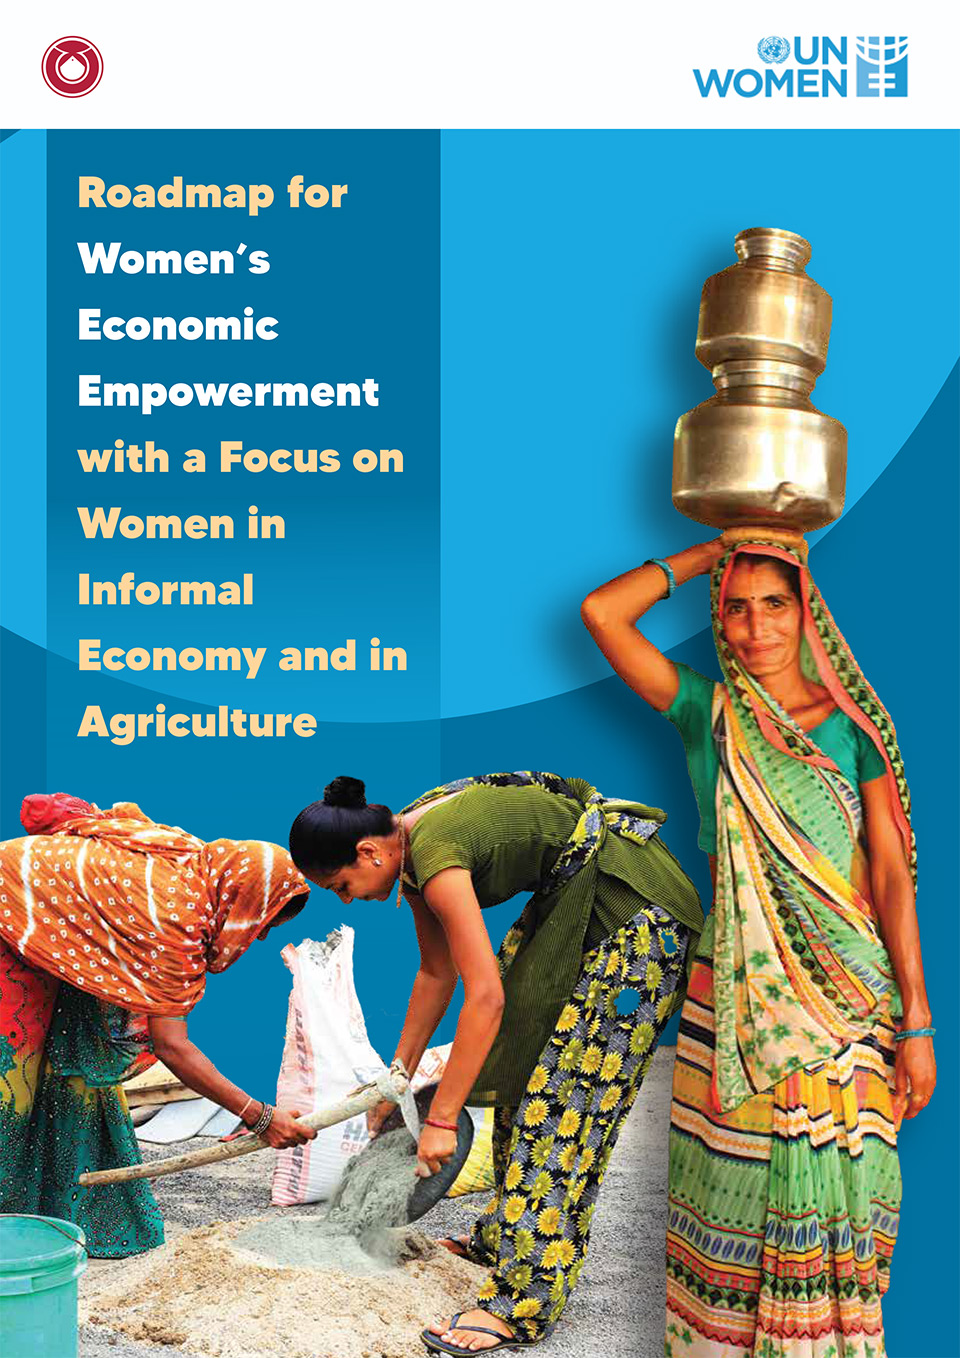 Roadmap for Women’s Economic Empowerment in India